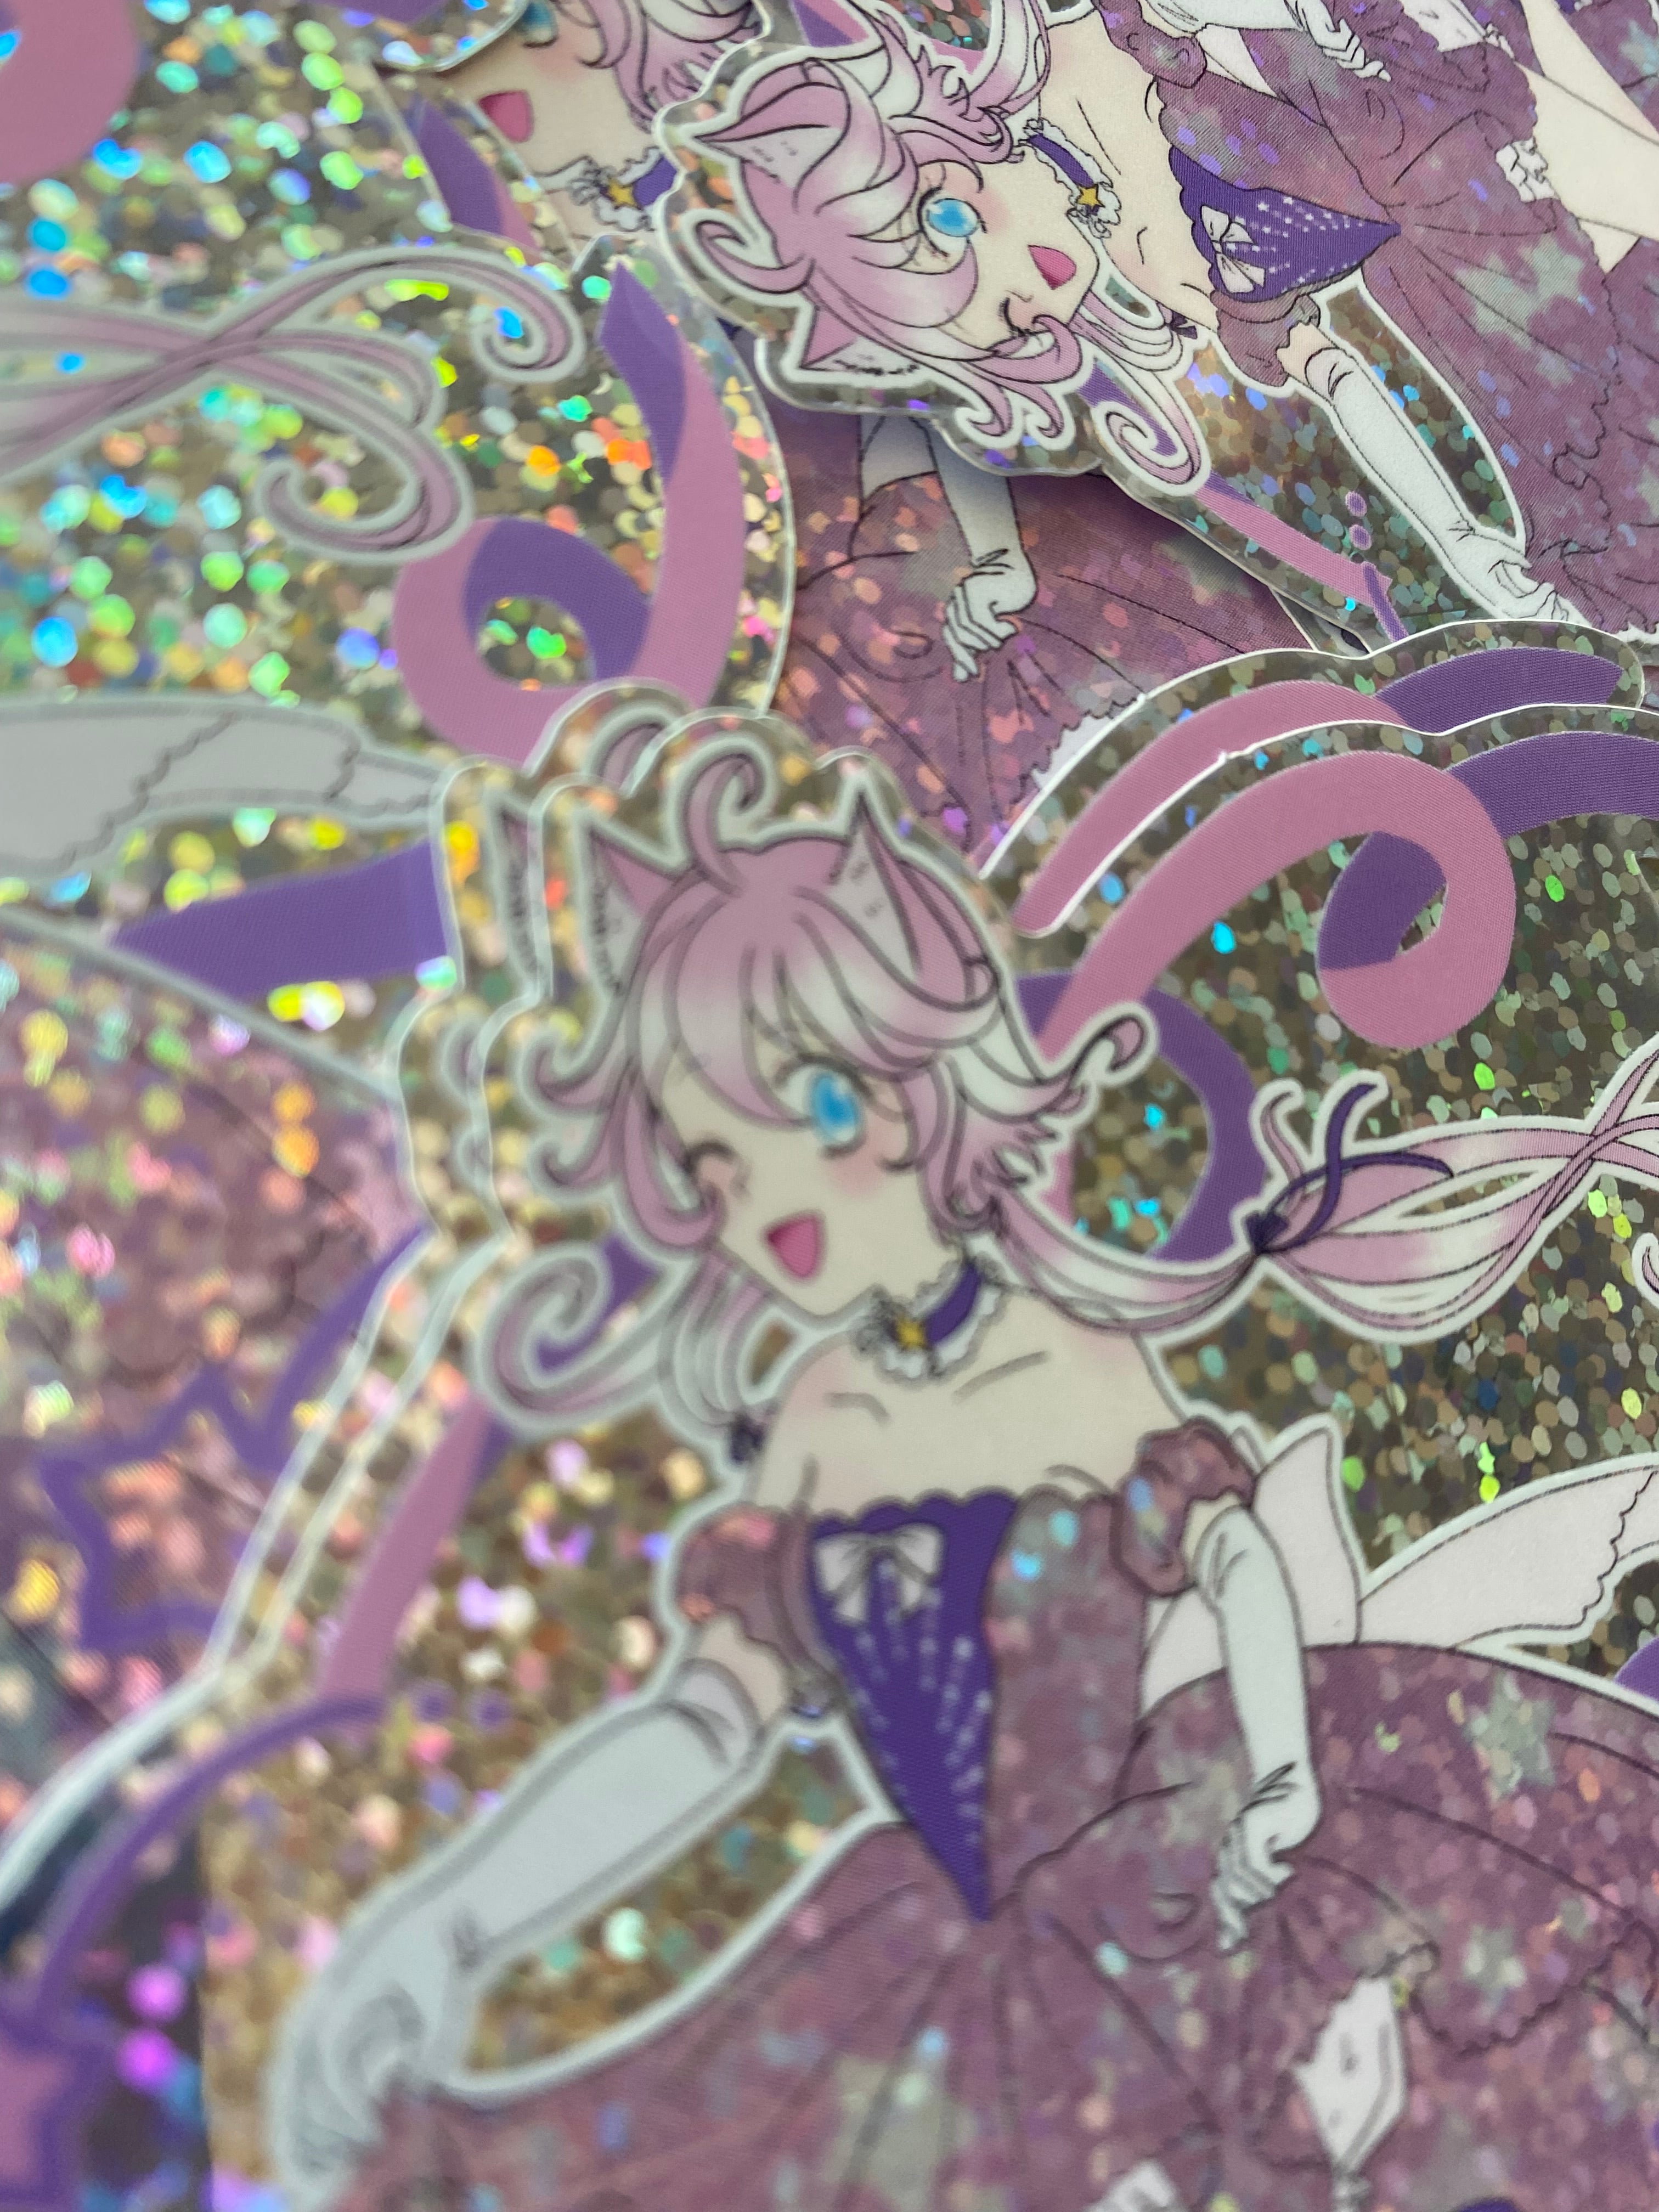 Magical Princess Sky festive dress magical girl glitter sticker 4 inch